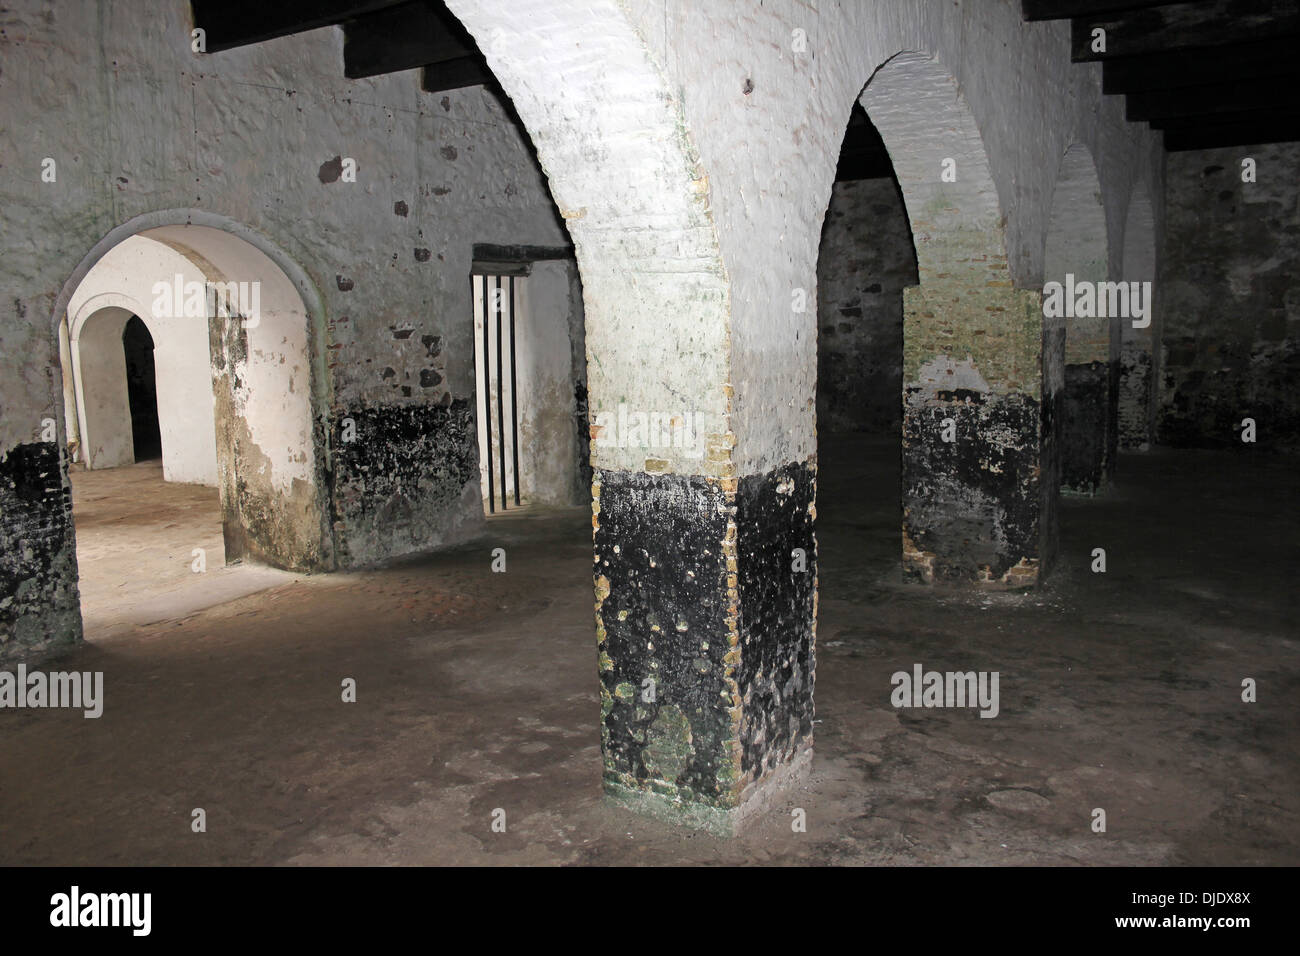 Dungeon For Holding Slaves, Elmina Castle, Ghana Stock Photo